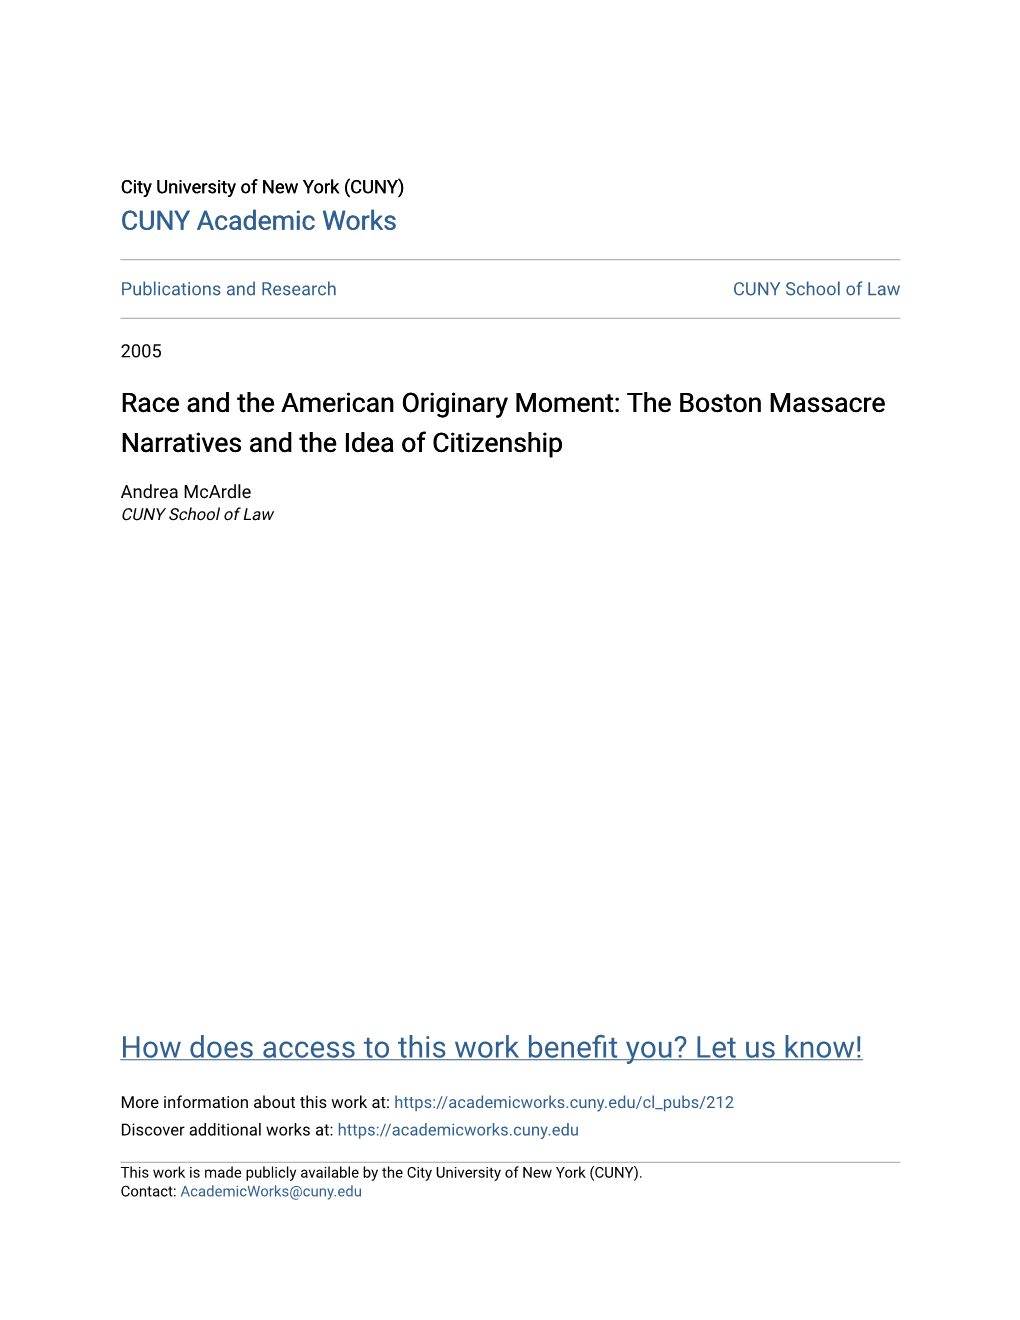 The Boston Massacre Narratives and the Idea of Citizenship